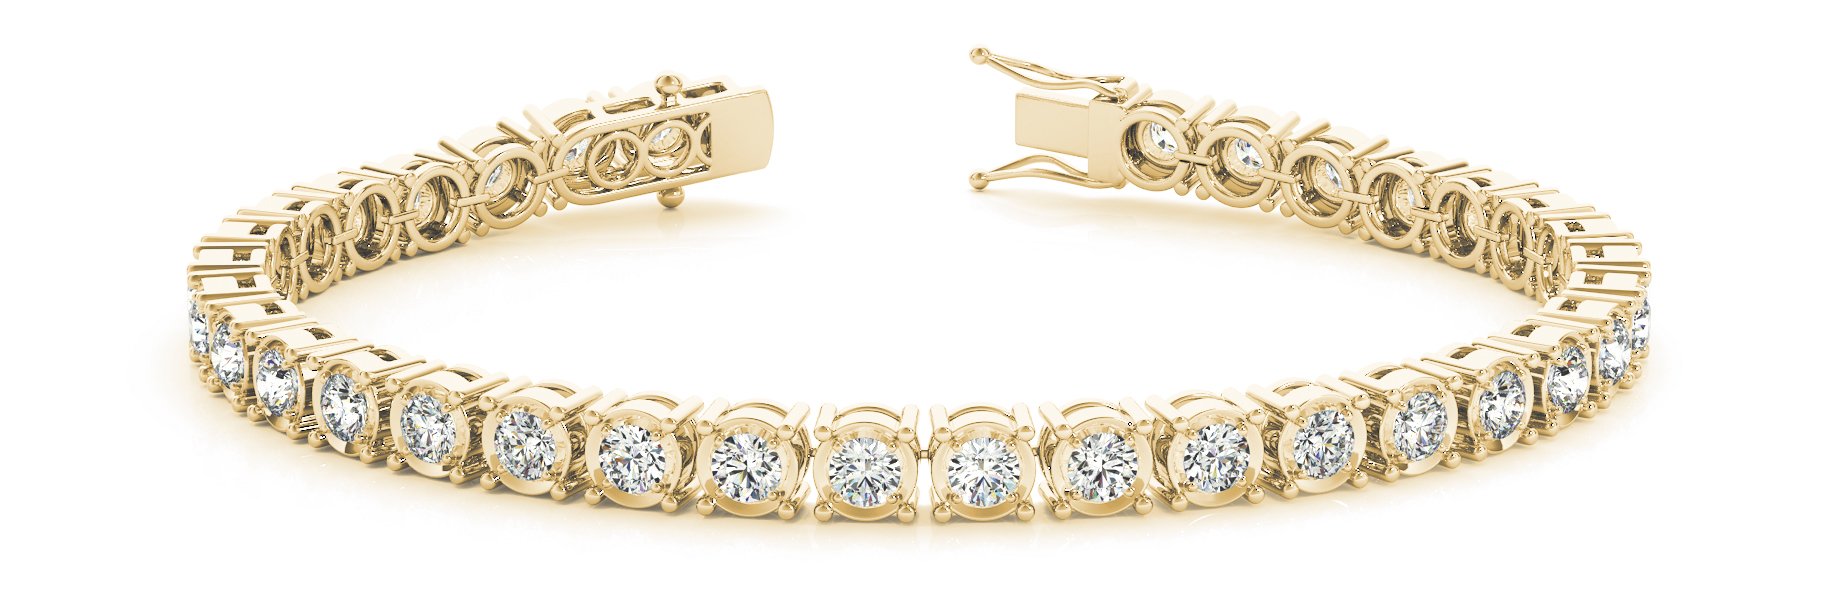 Fancy Diamond Bracelet Ladies 6.79ct tw - 14kt Yellow Gold